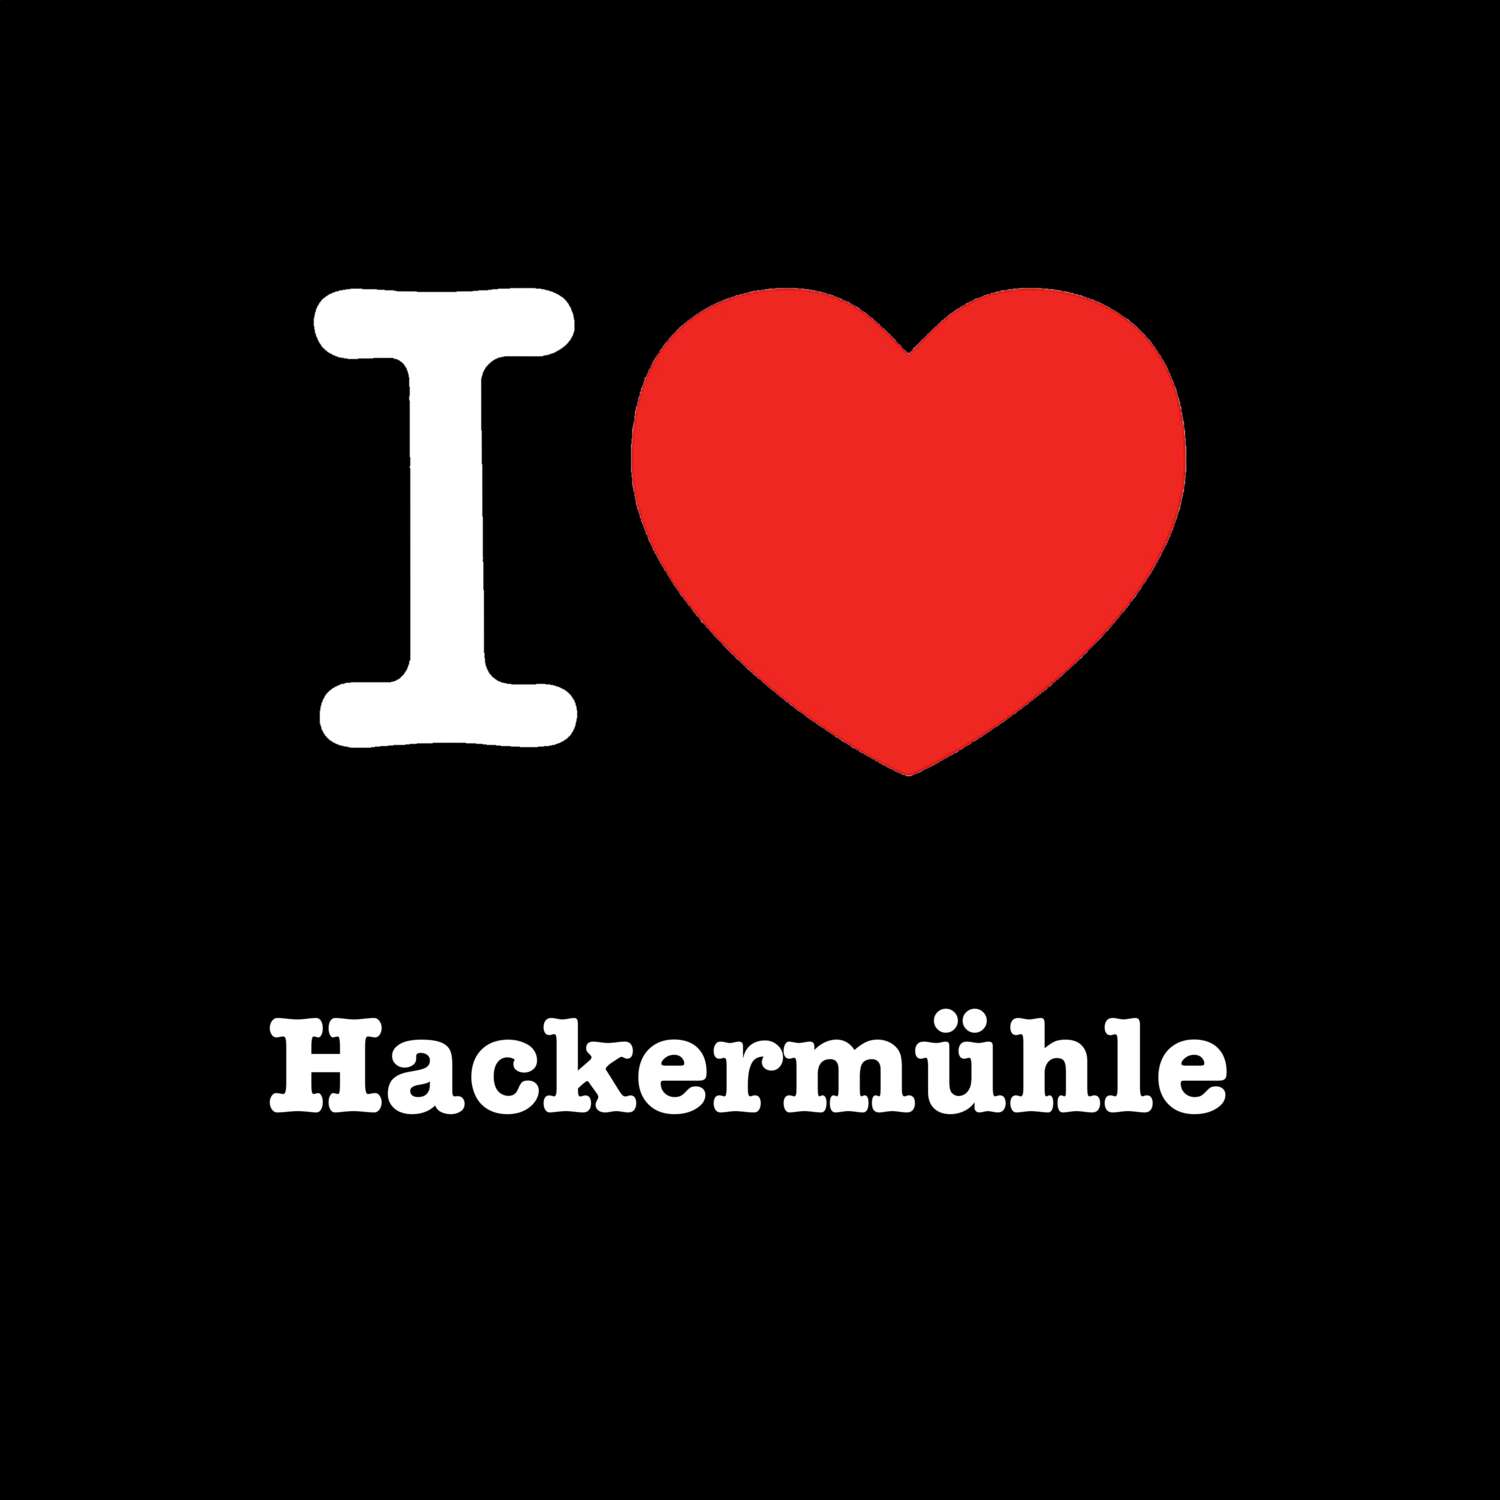 Hackermühle T-Shirt »I love«